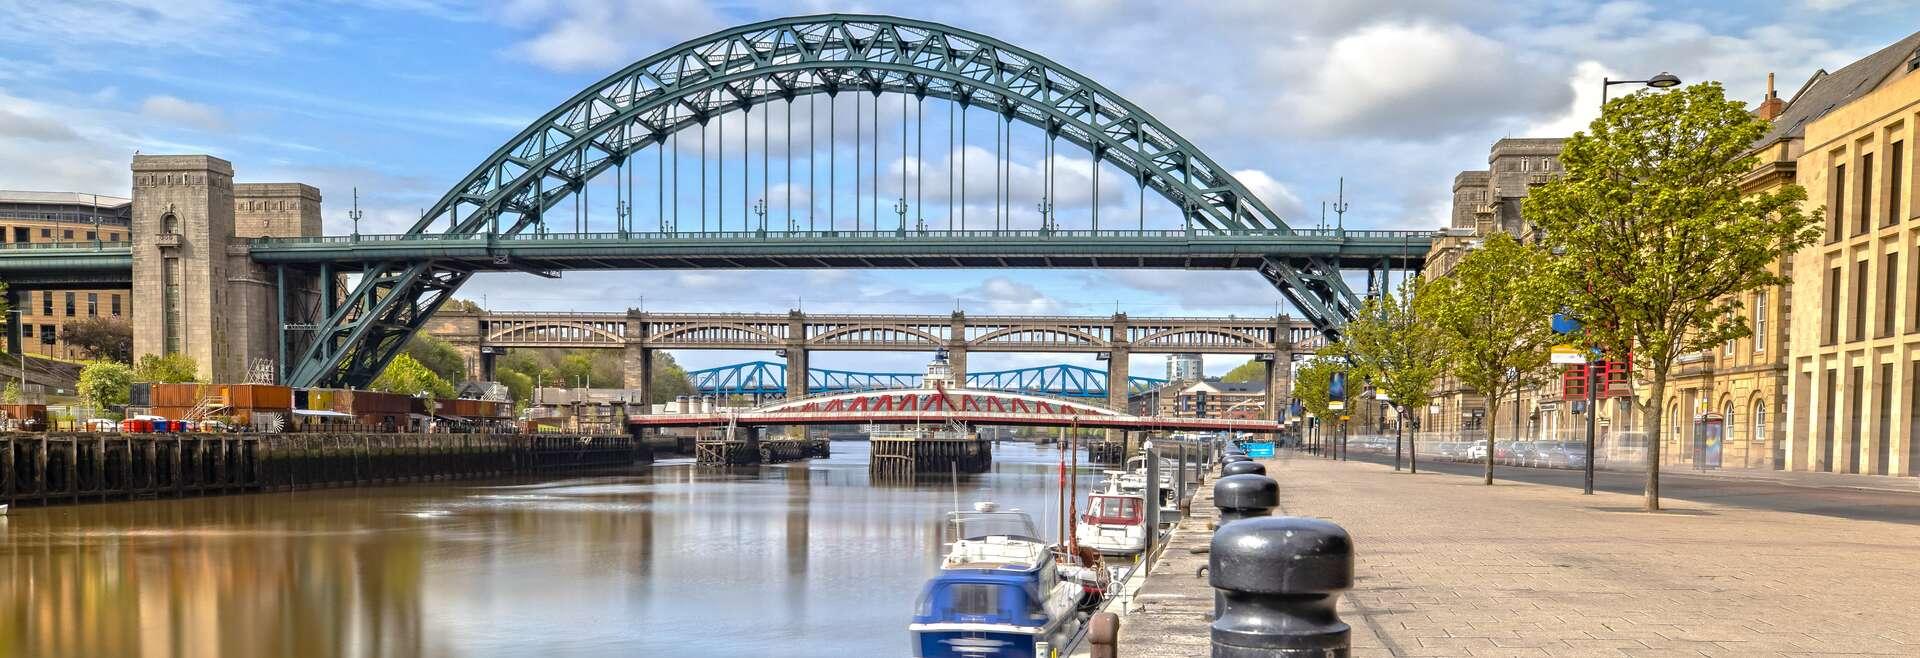 Séjour linguistique Angleterre, Newcastle upon tyne, ponts